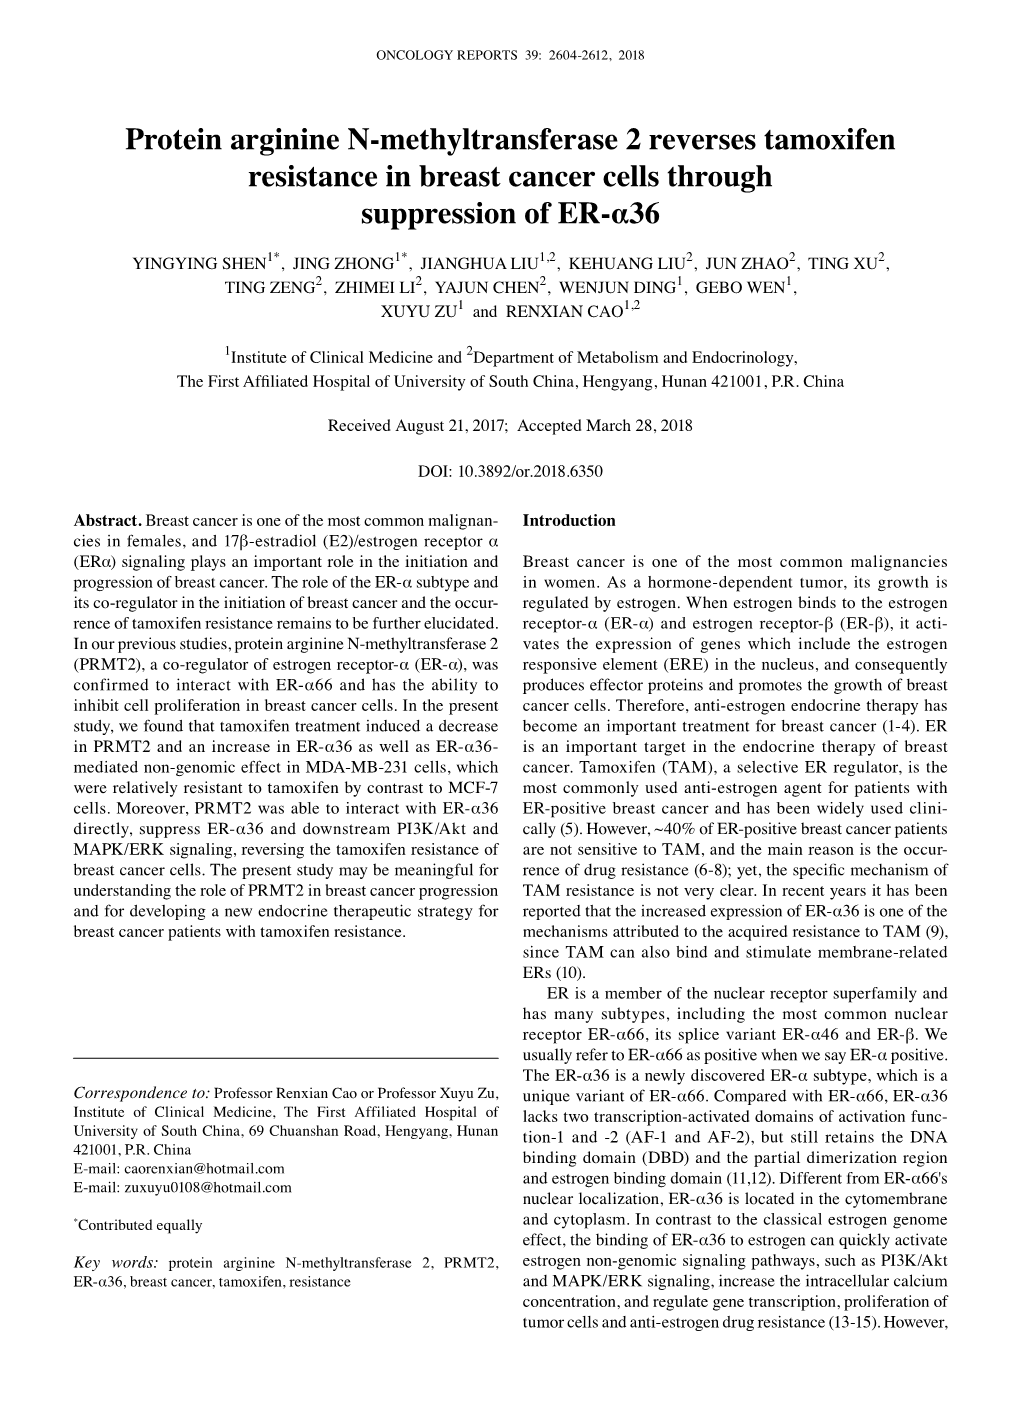 Protein Arginine N-Methyltransferase 2 Reverses Tamoxifen Resistance in Breast Cancer Cells Through Suppression of ER-Α36